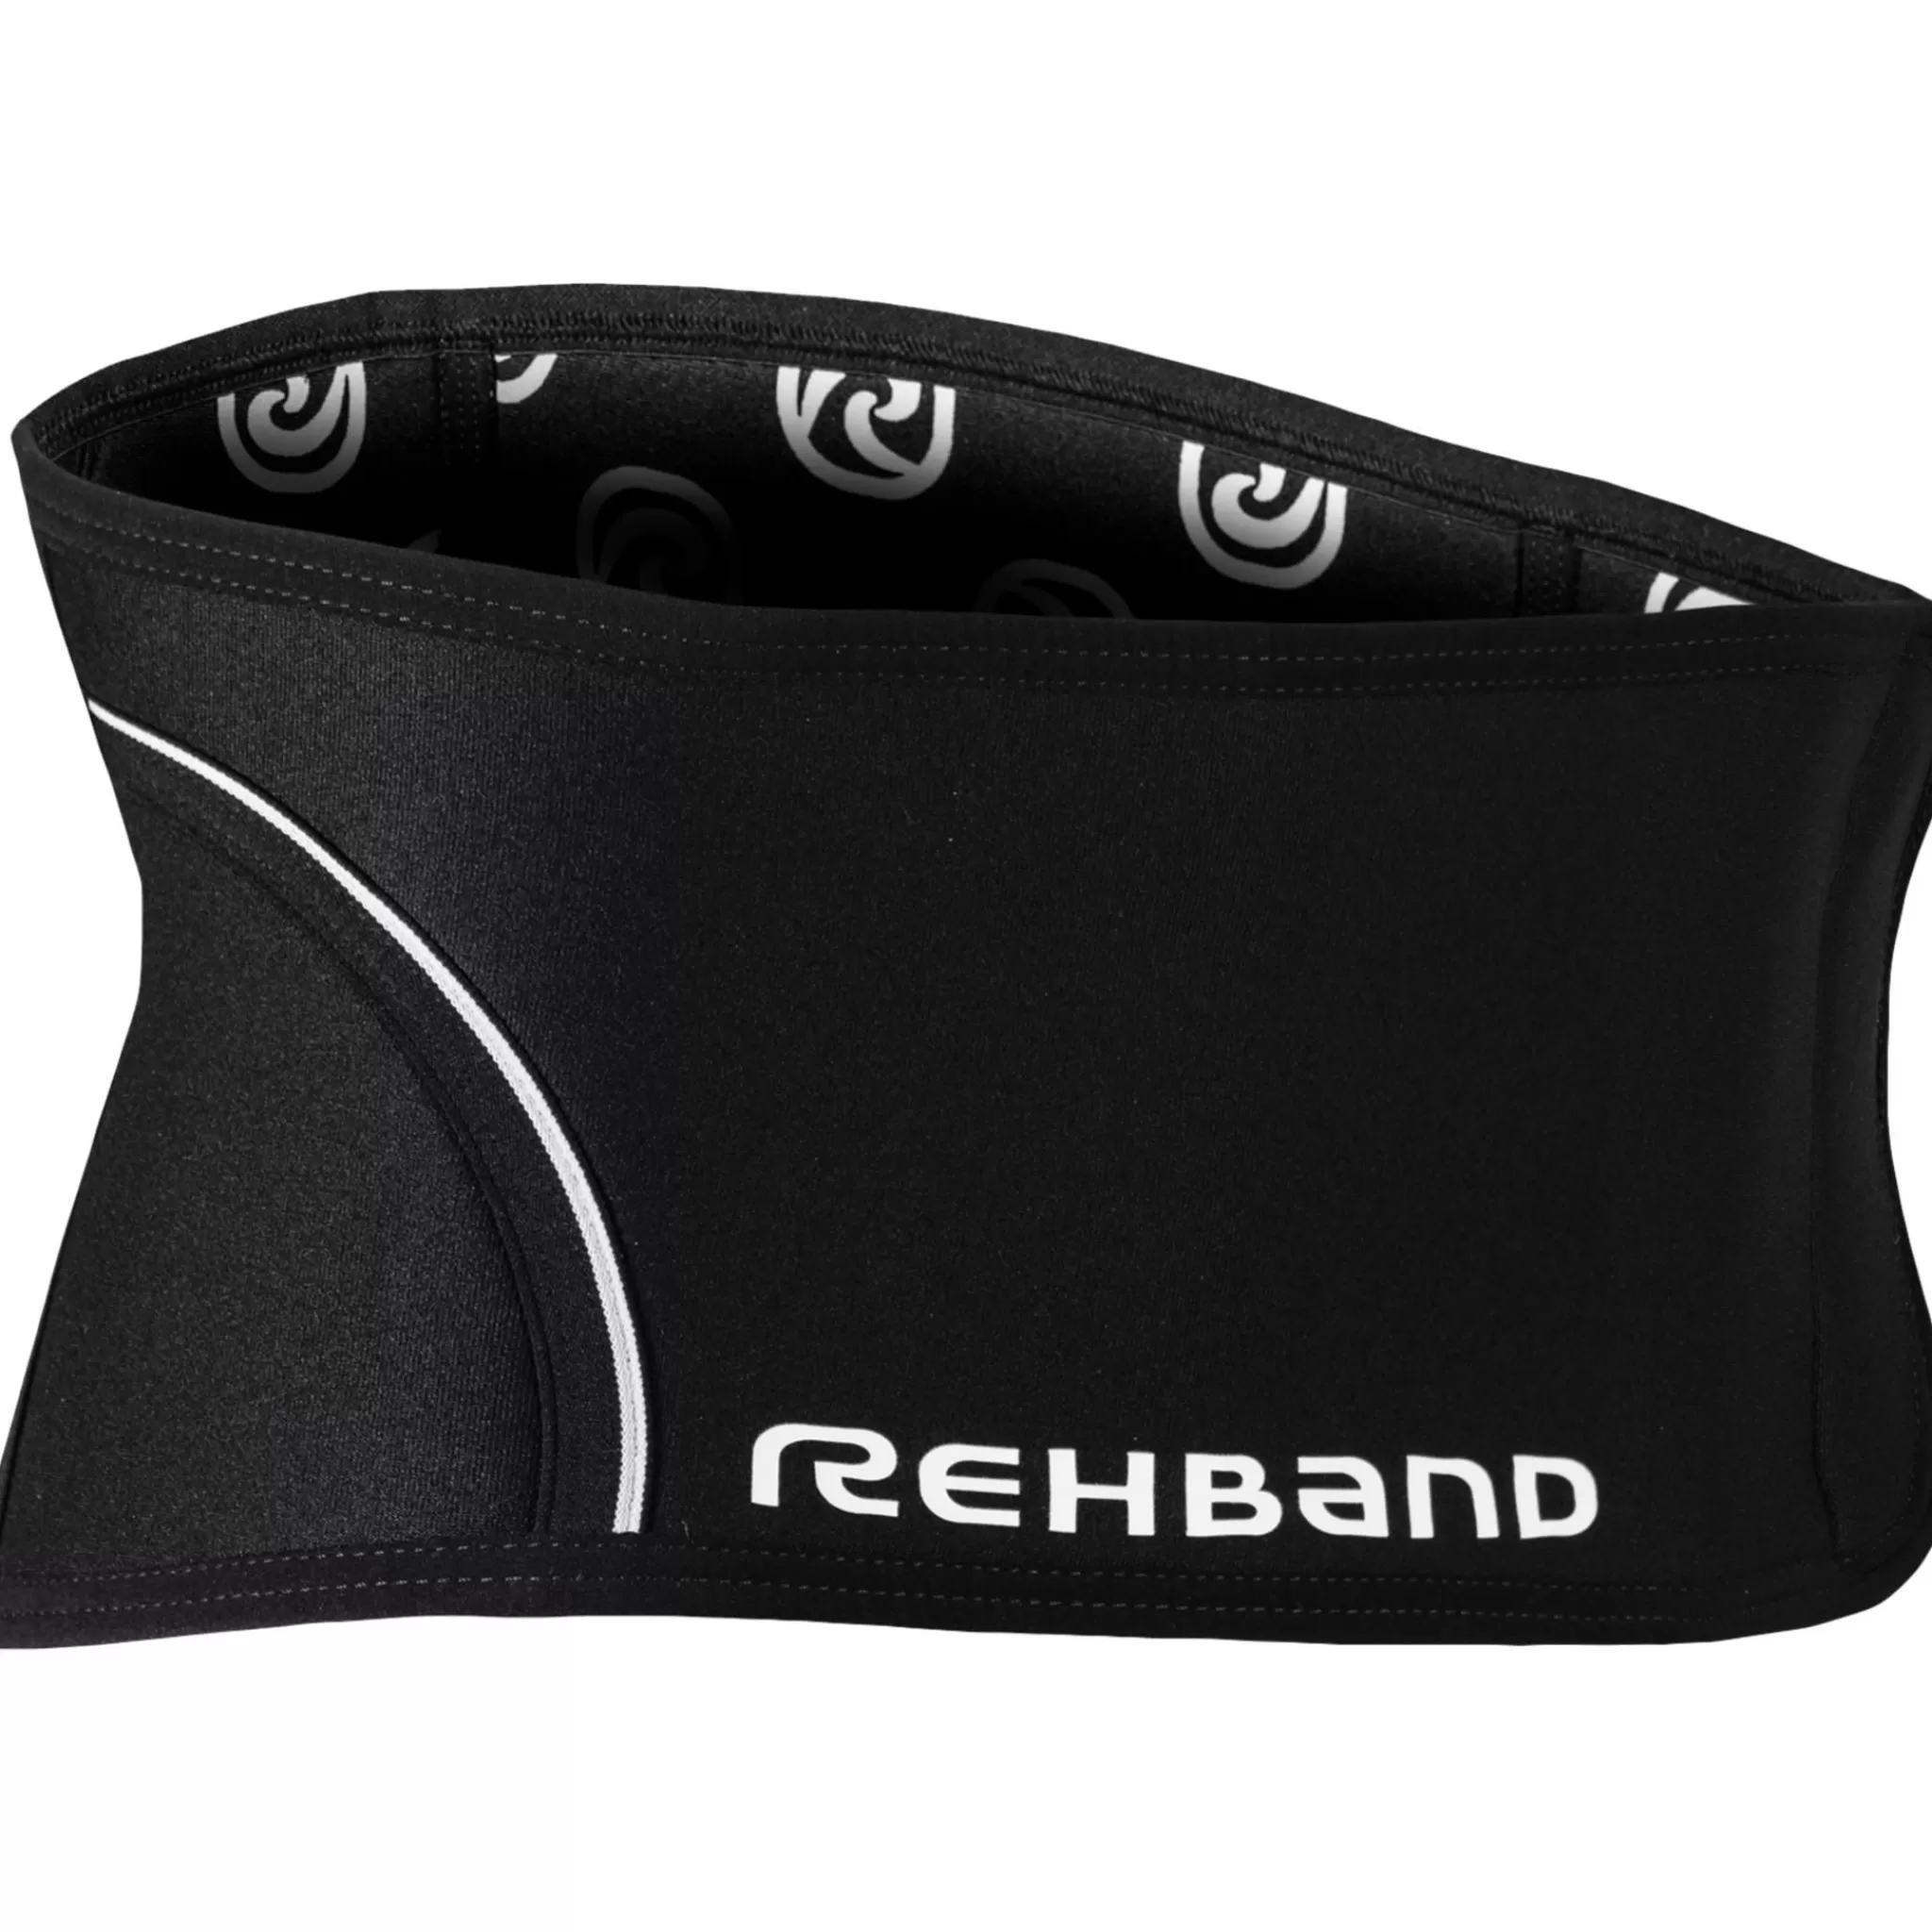 Best rehband Qd Back Support 5 Mm, Ryggbeskyttelse